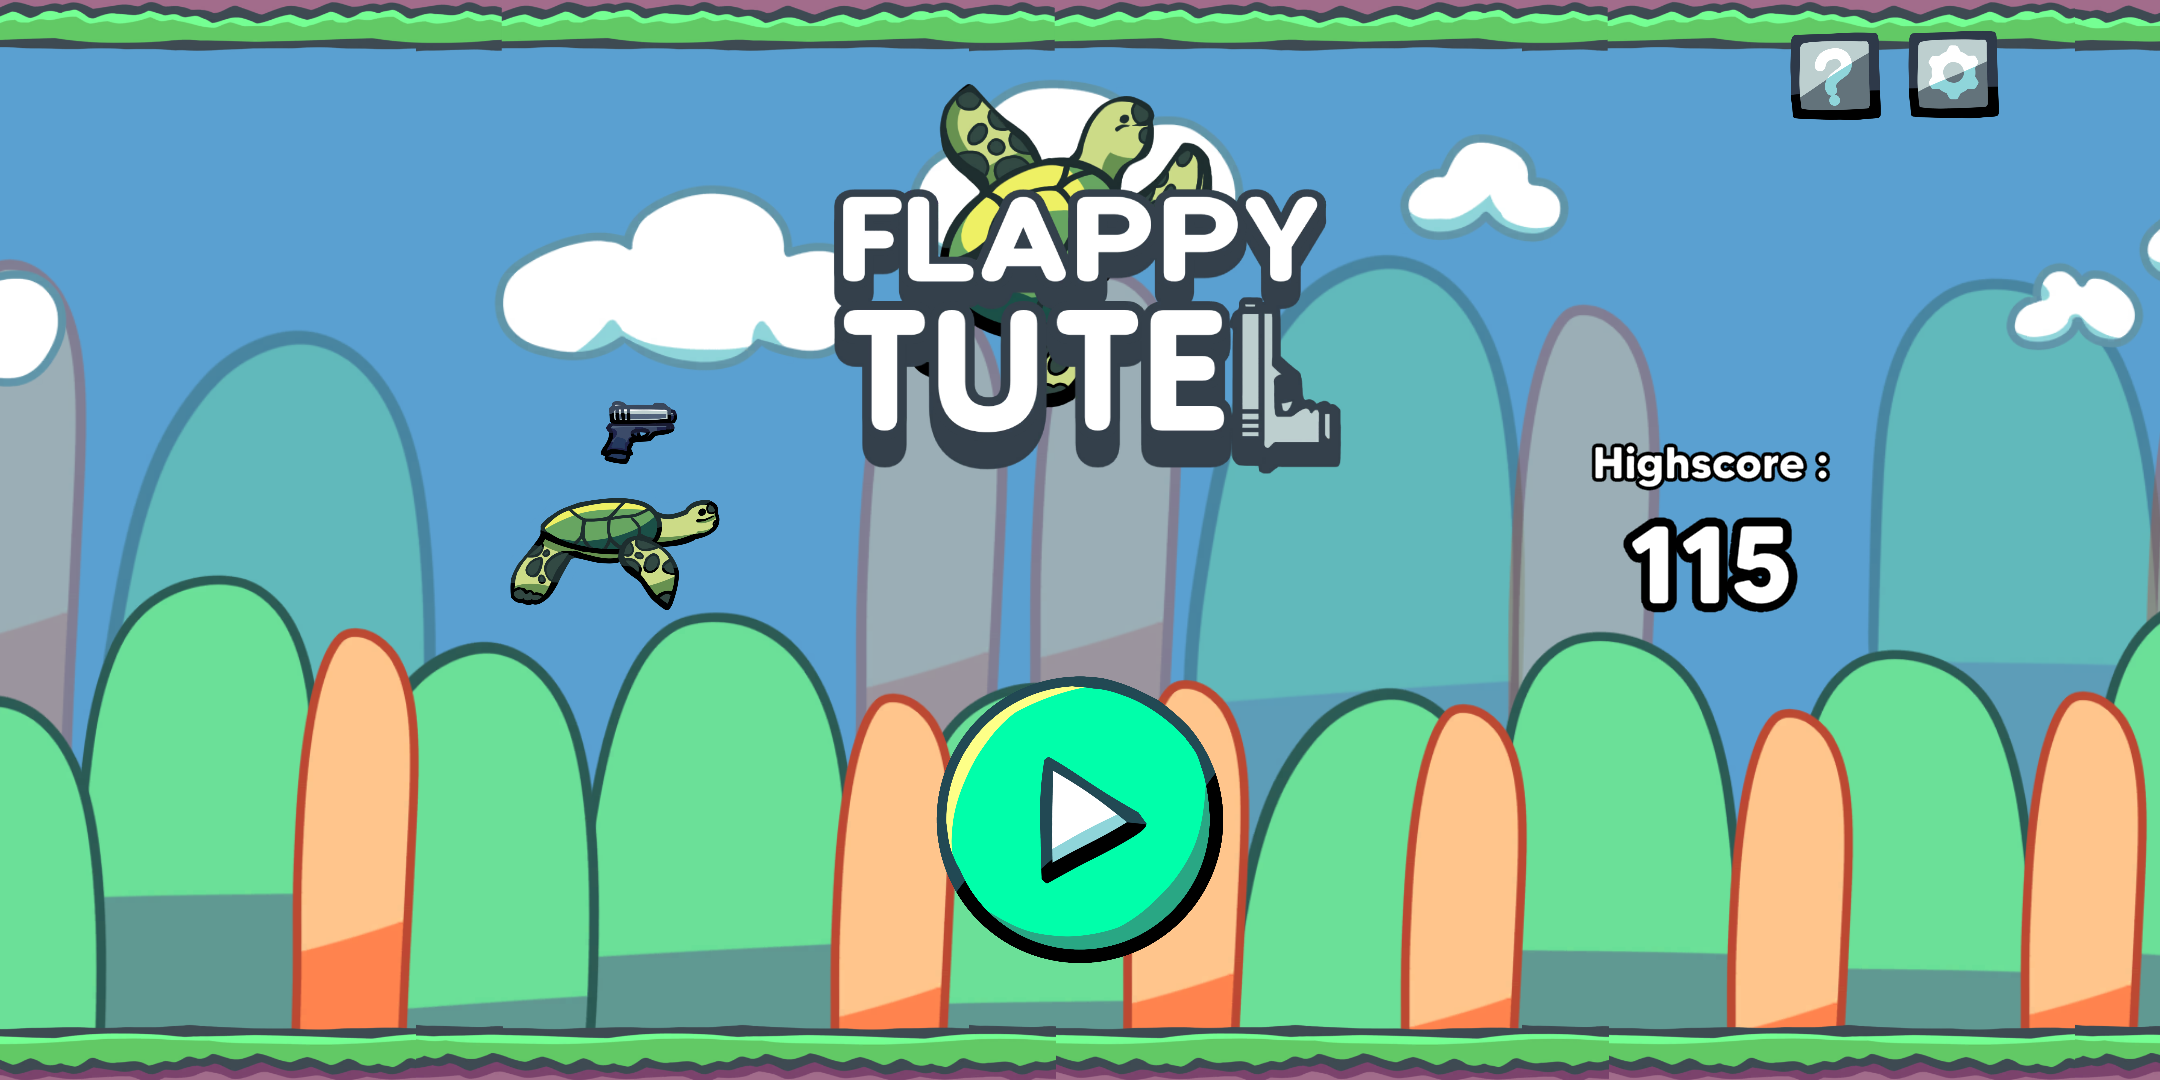 Flappy Tutel2